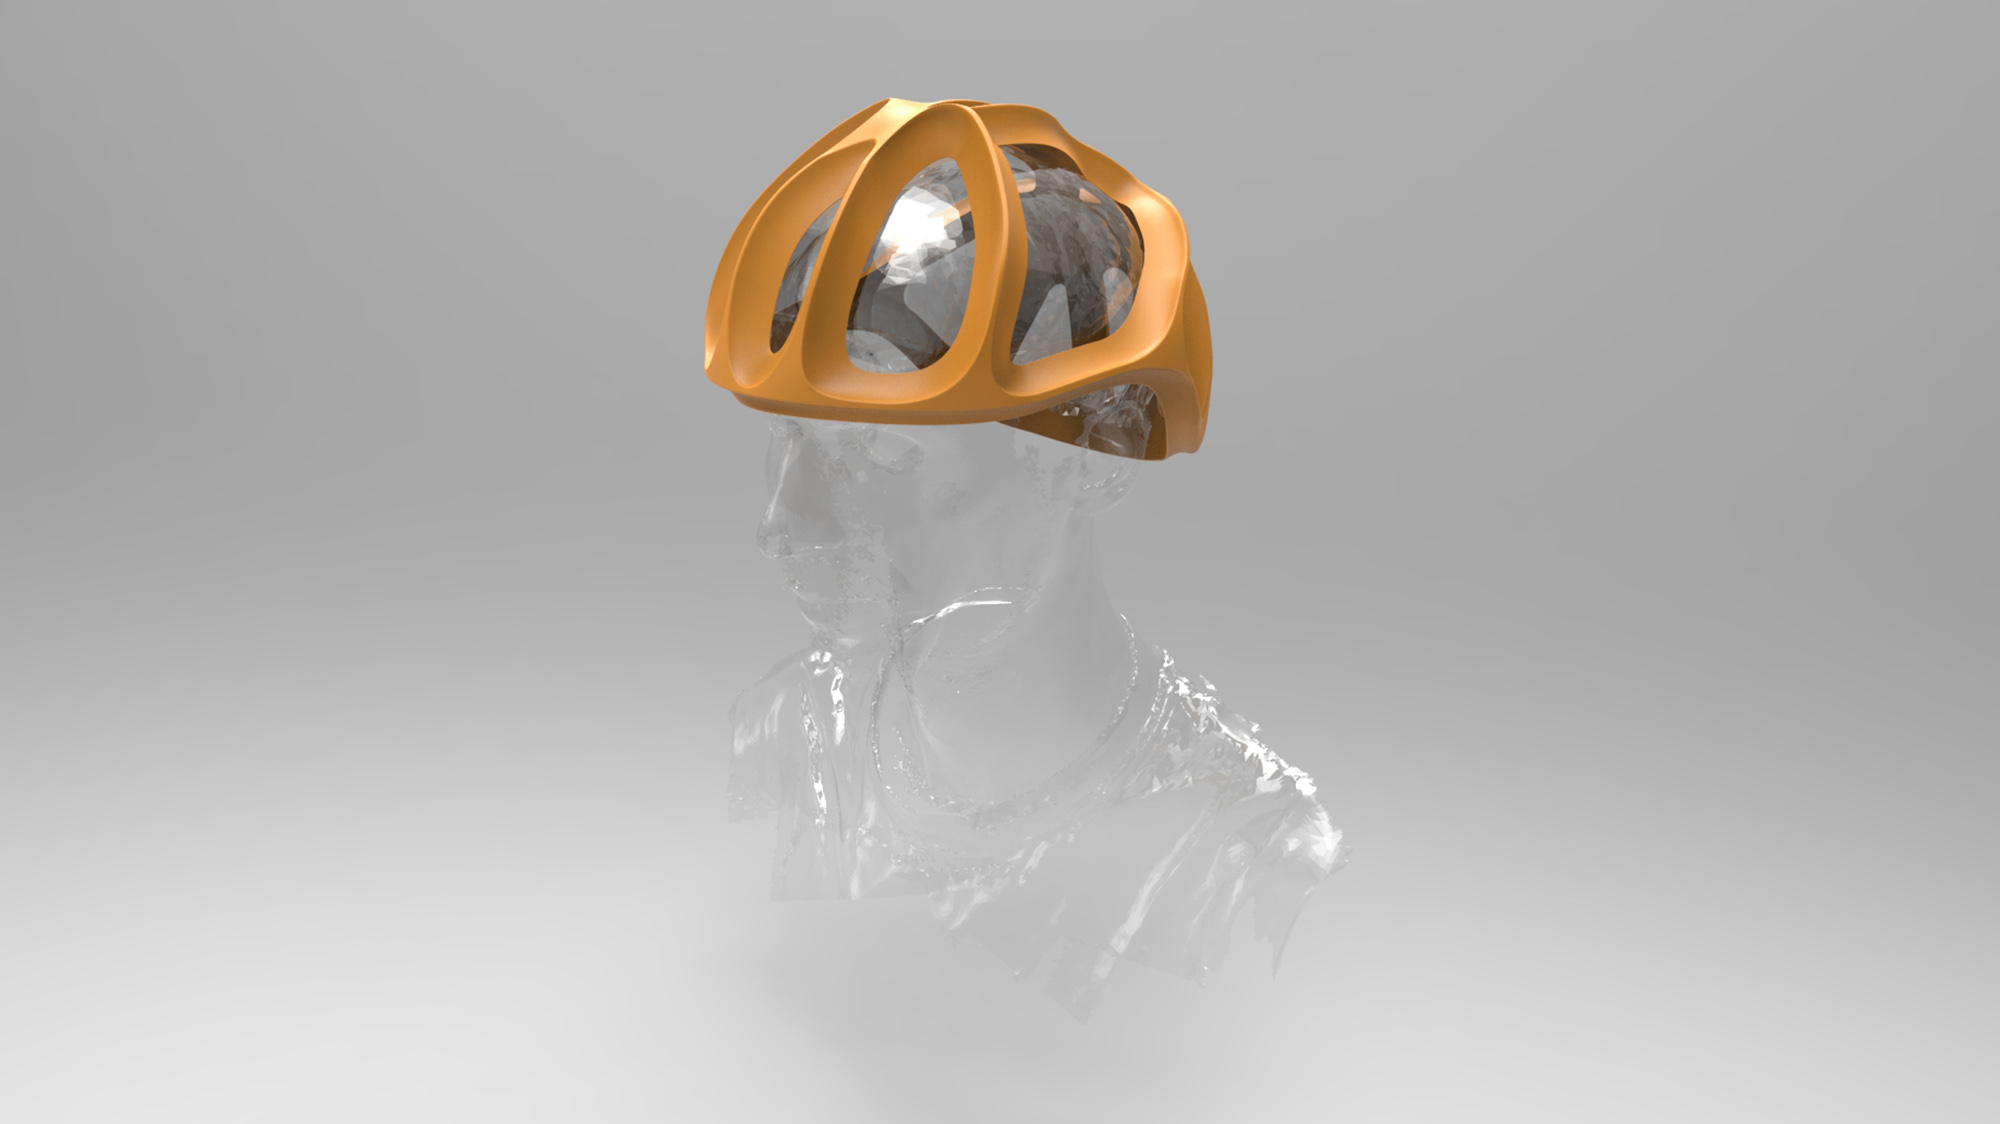 Skate-Helm, erstes CAD-Model auf Grundlage der Ergebnisse der Software zur Topologyoptimierung (Foto: Ronny Haberer)